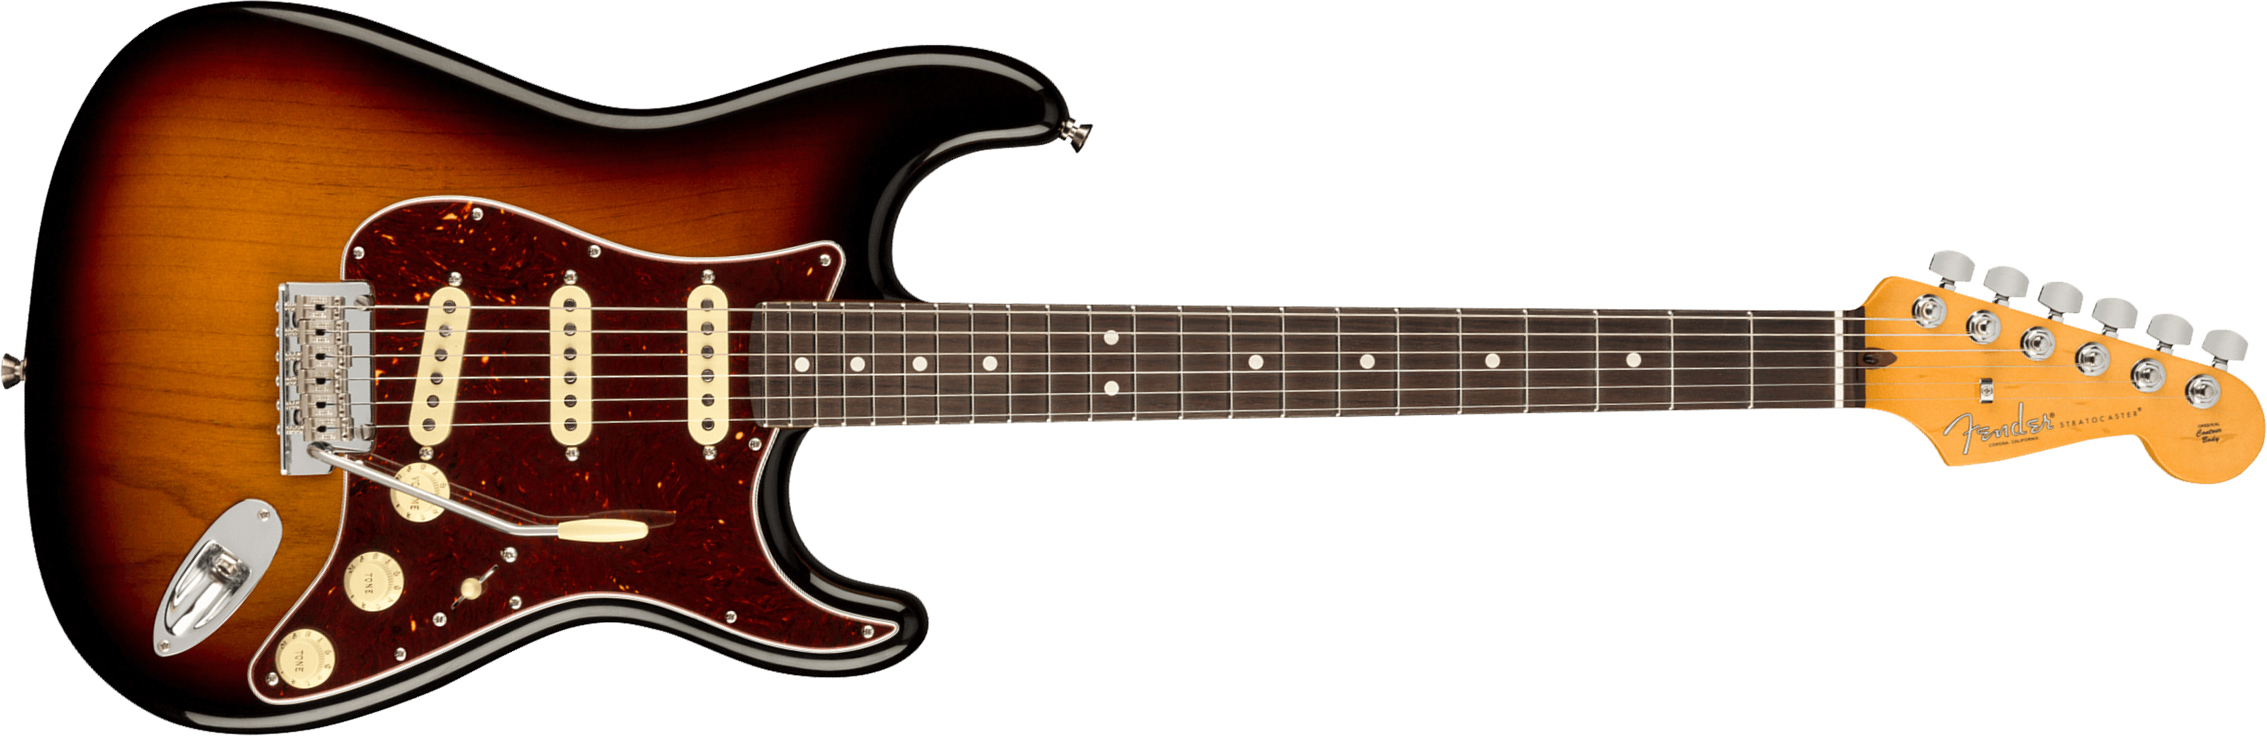 Fender Strat American Professional Ii Usa Rw - 3-color Sunburst - Str shape electric guitar - Main picture